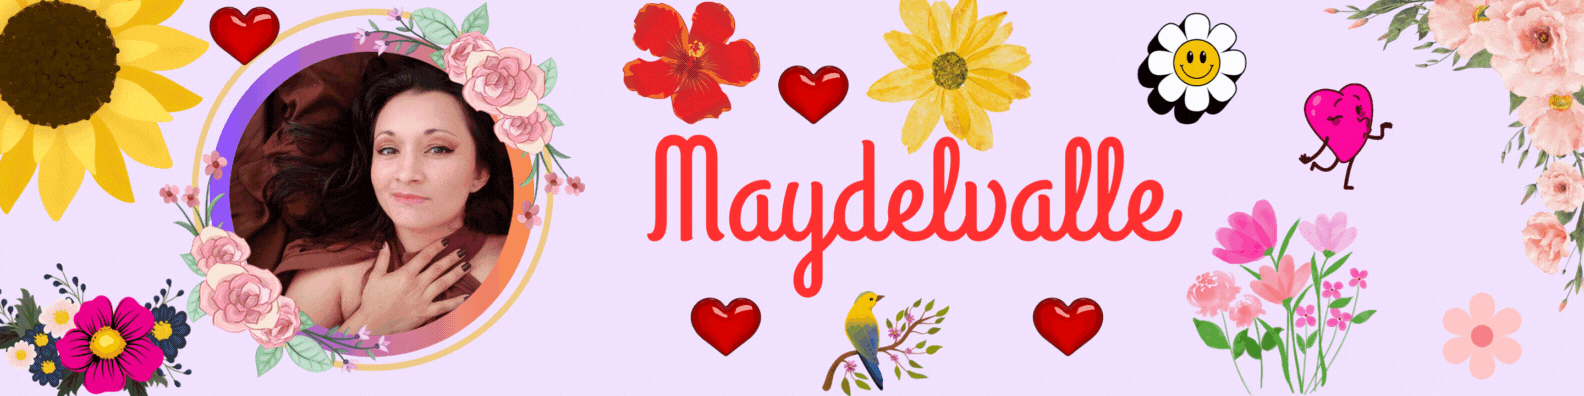 Foto de fondo para LinkedIn psicóloga infantil ilustrado floral verde y lila.gif